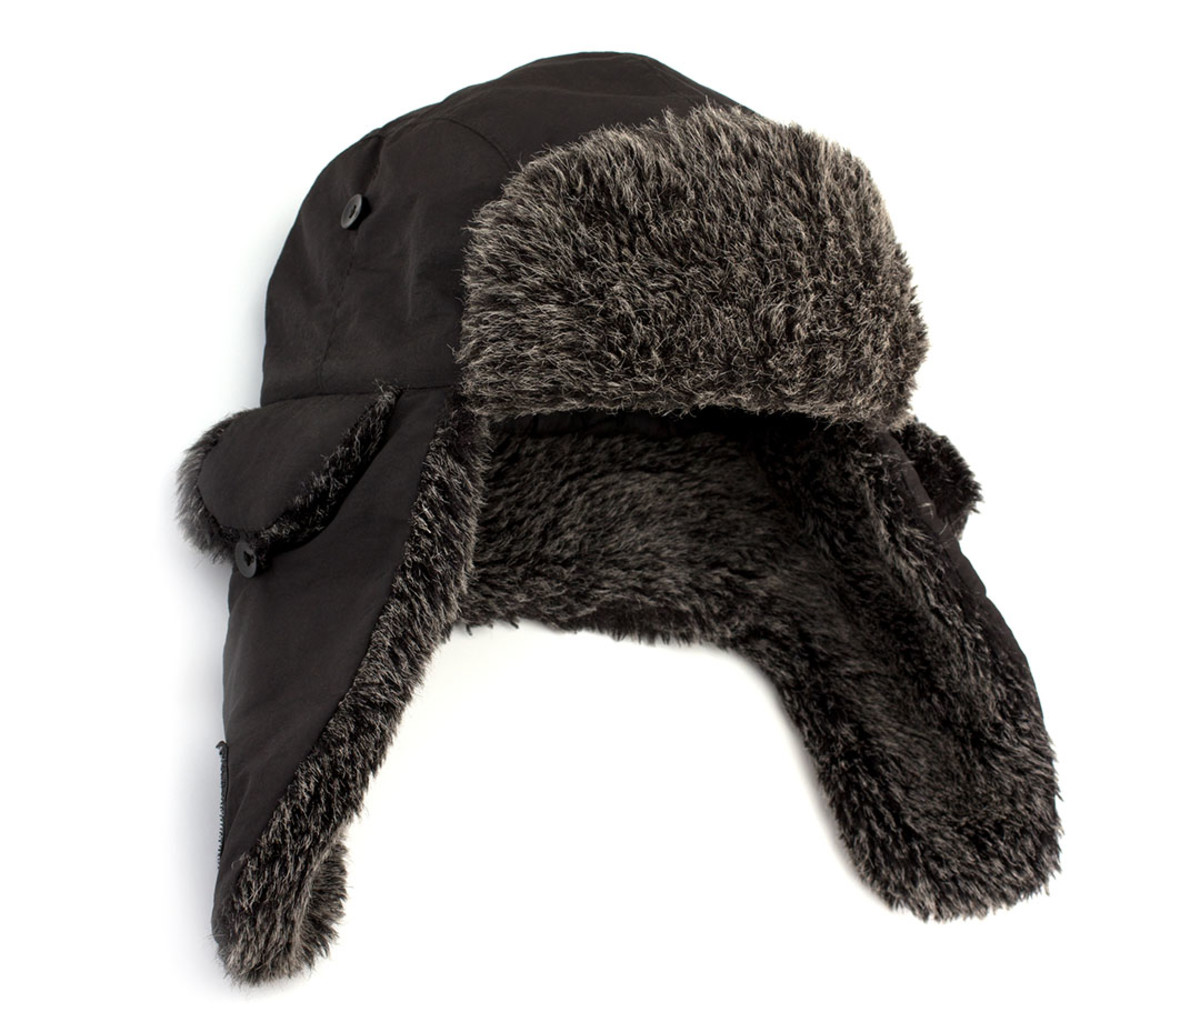 Northwoods trapper hat